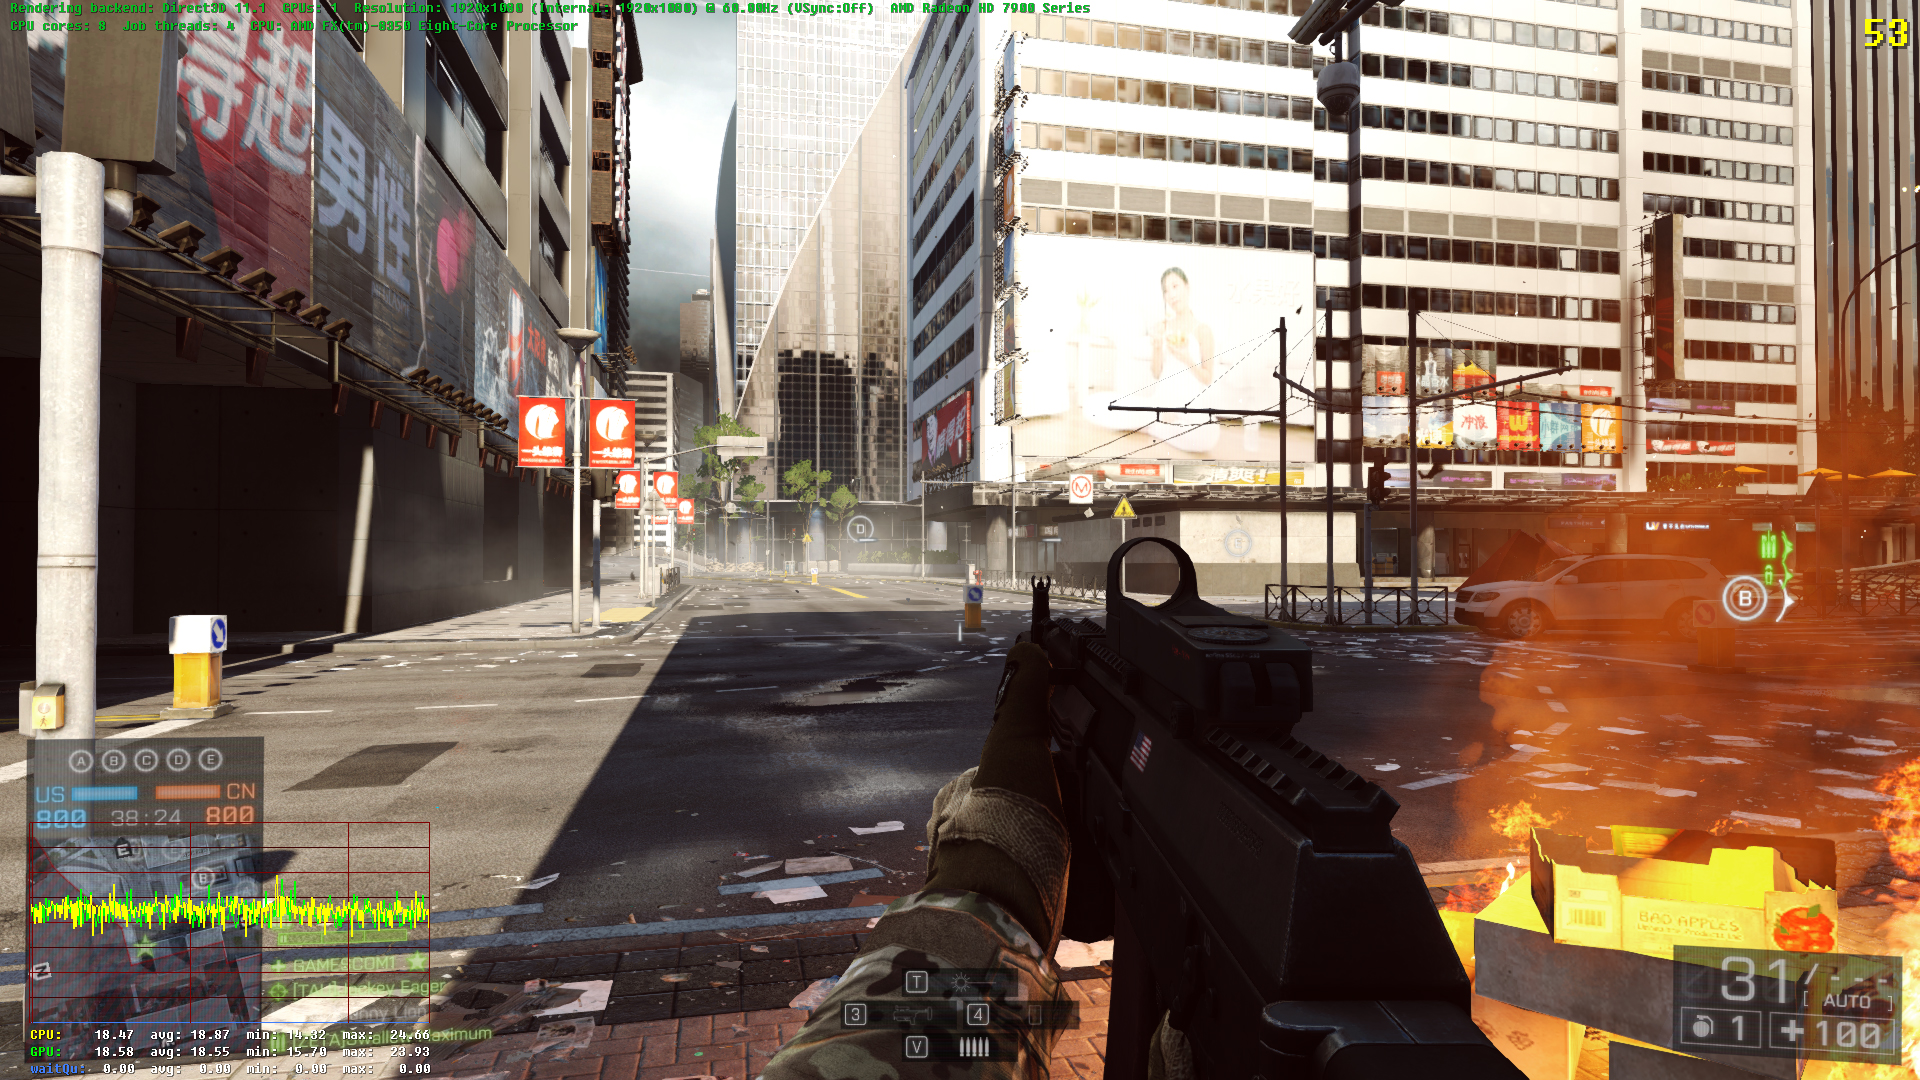 Mantle renderer now available in Battlefield 4 - News - Battlelog Battlefield 4